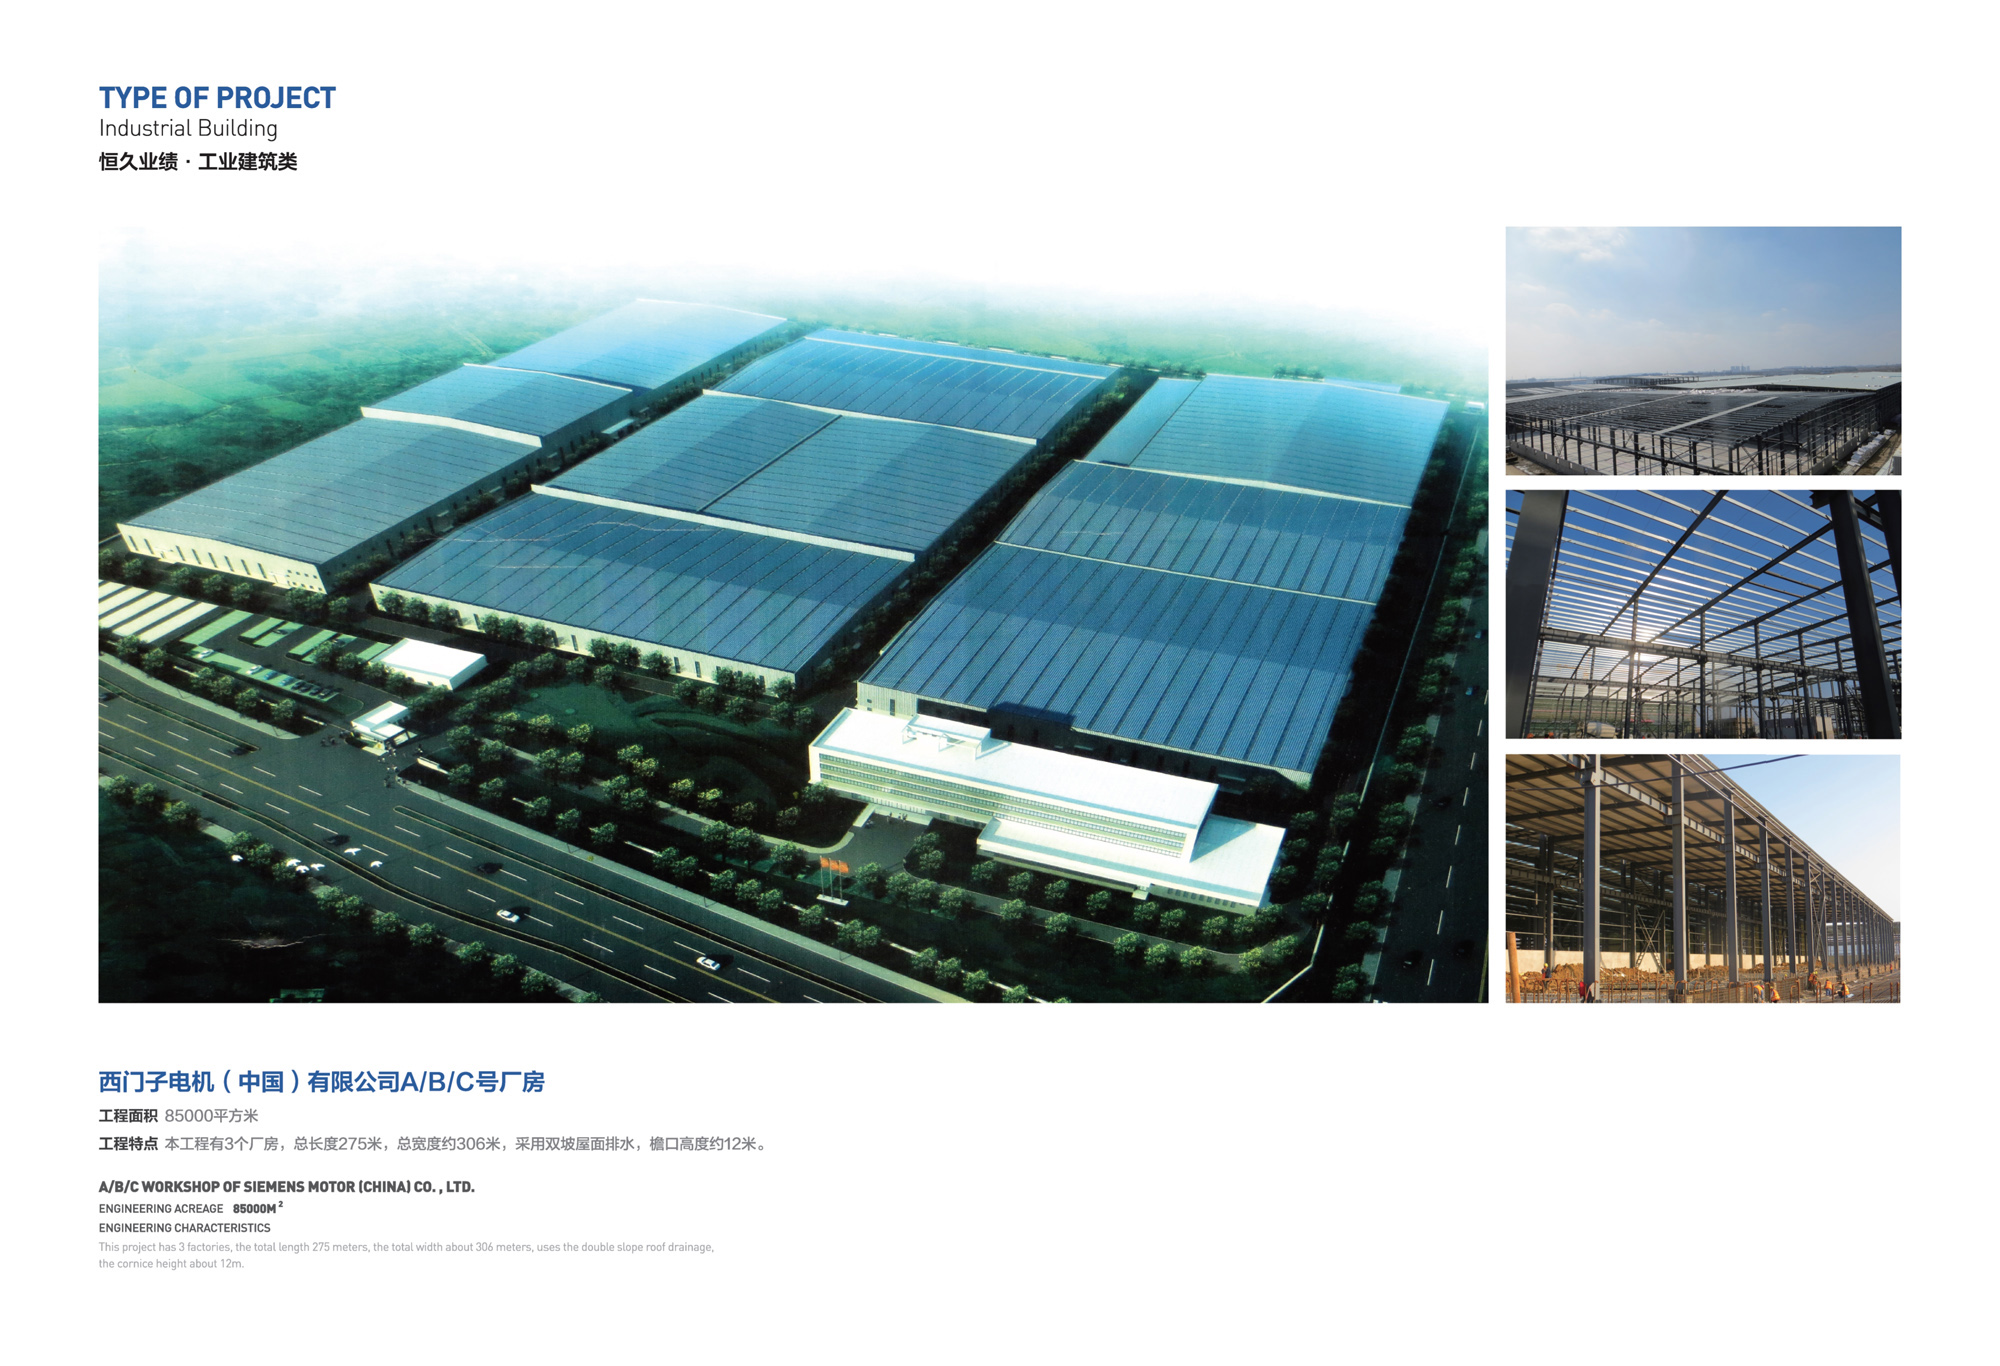 Siemens Electric (China) Co., Ltd. Building A/B/C